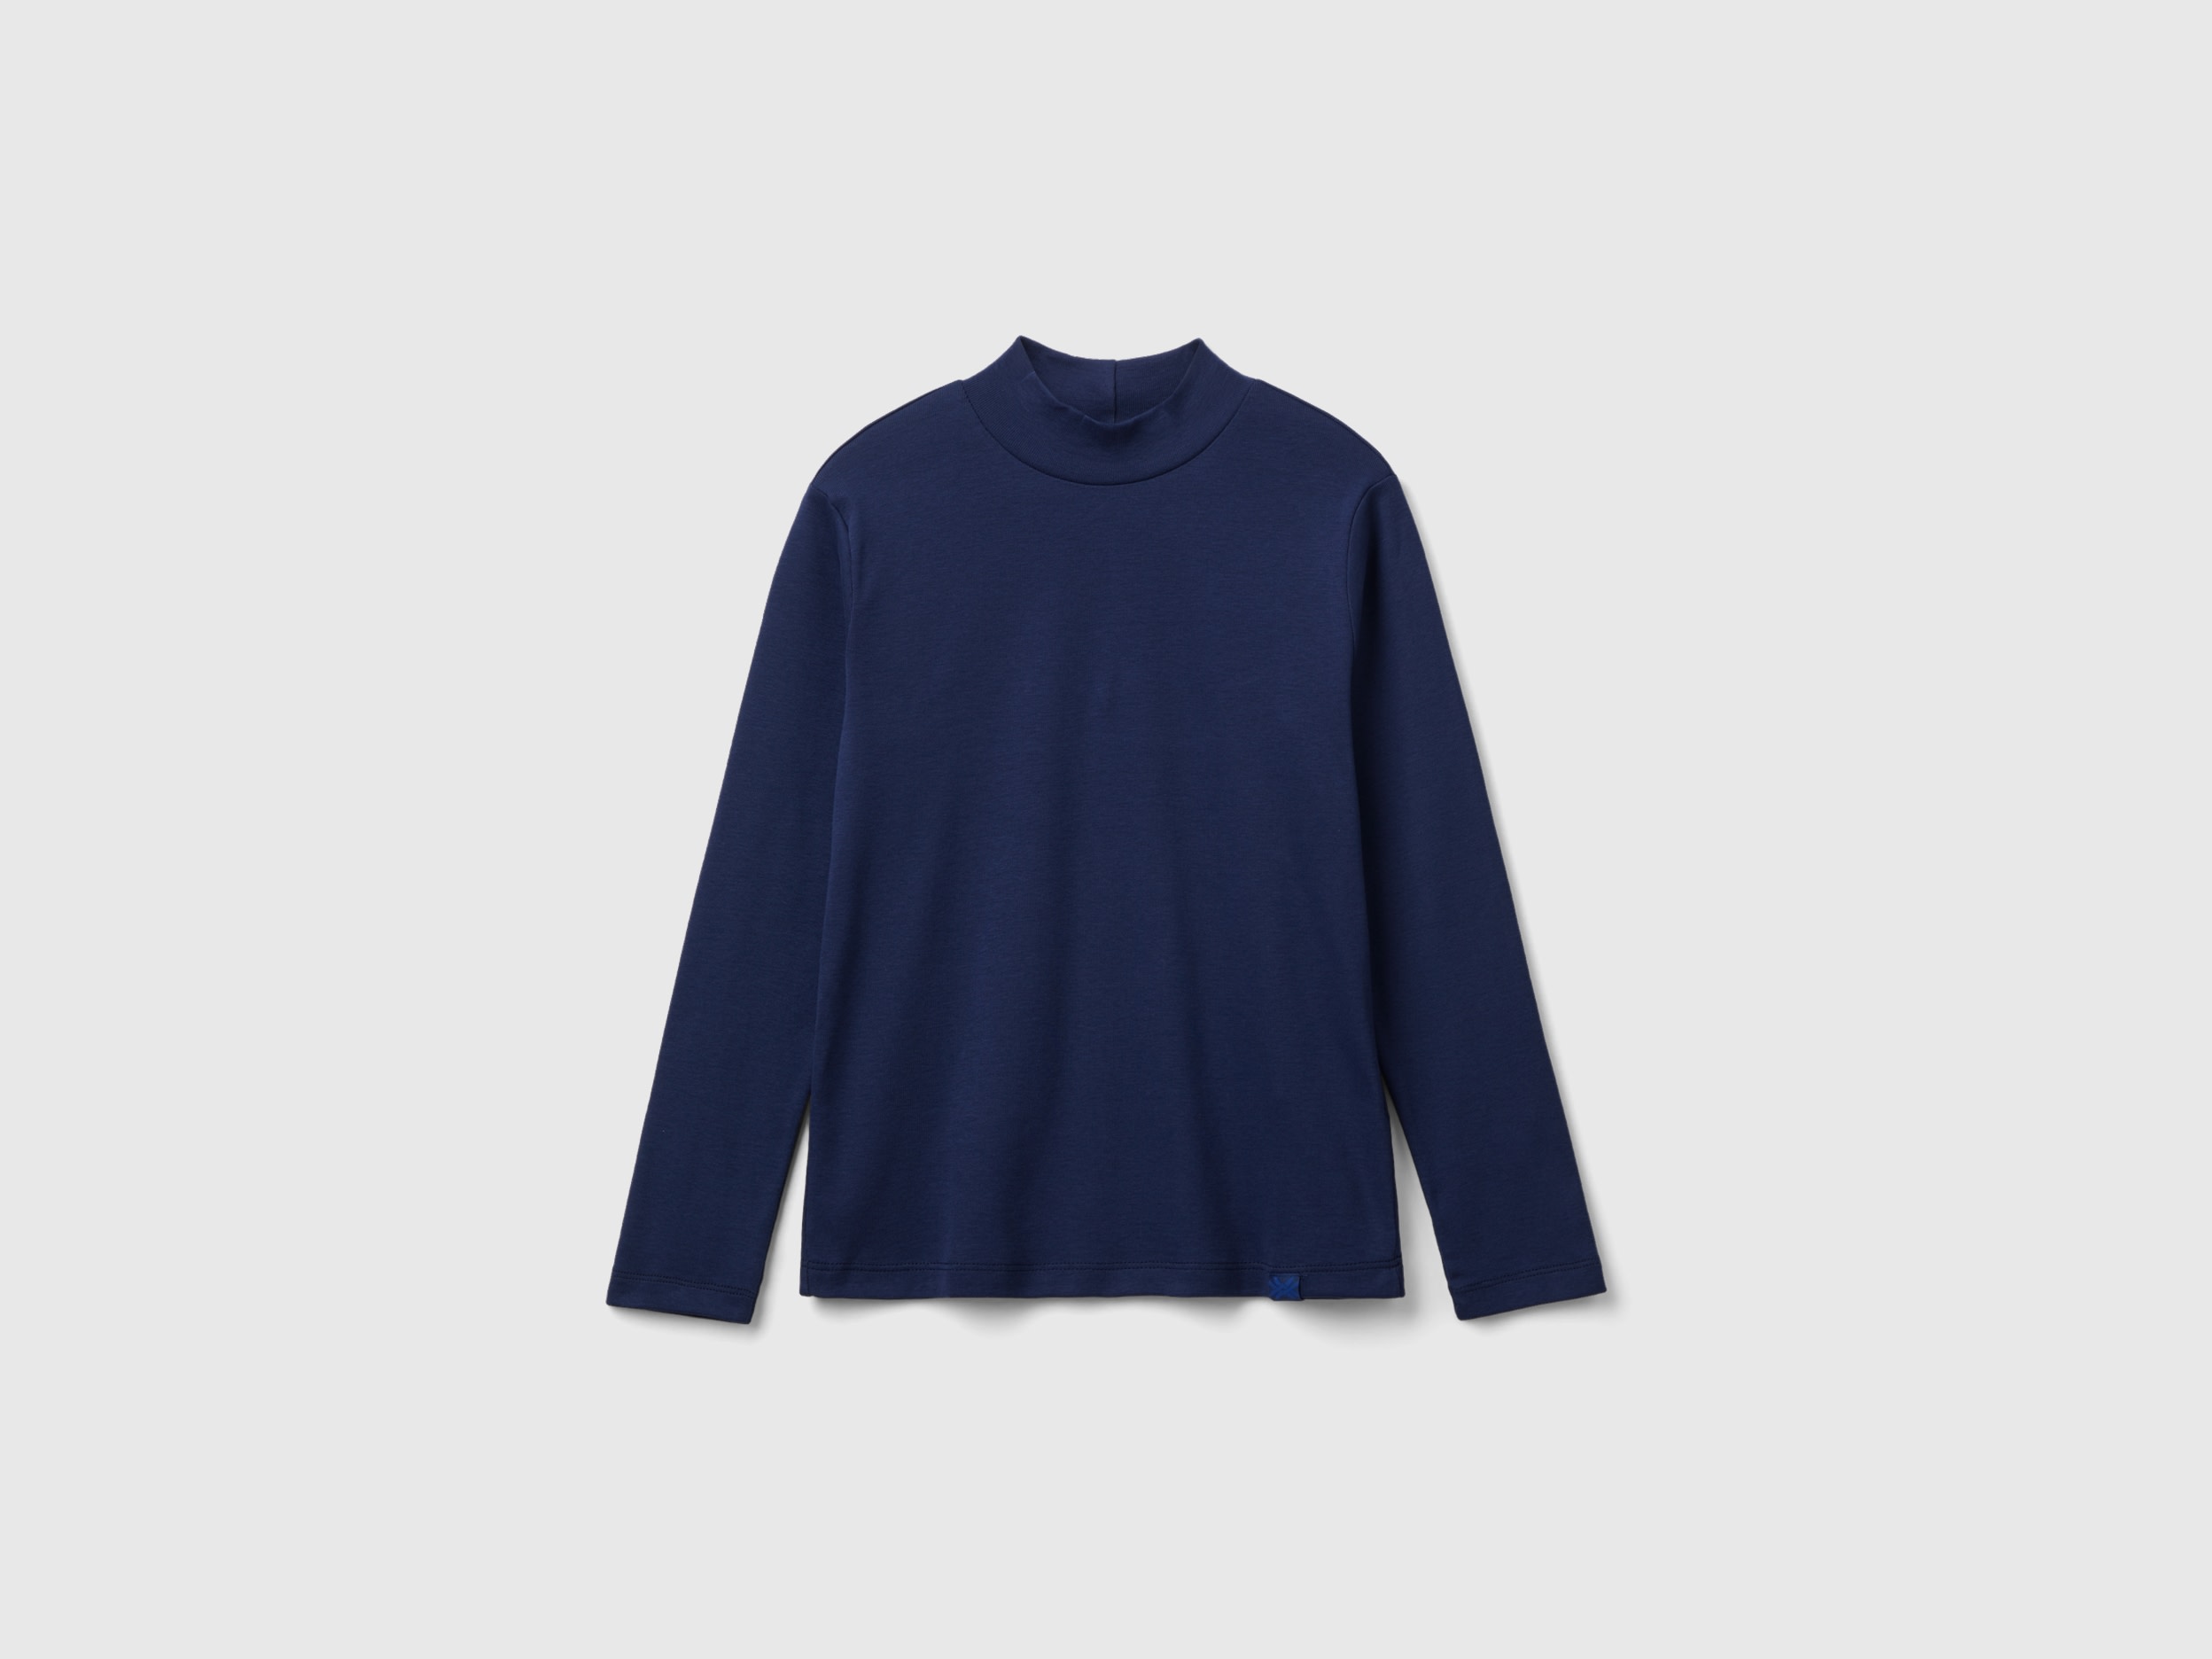 Benetton, Rubbed Knit Turtleneck T-shirt, size L, Dark Blue, Kids